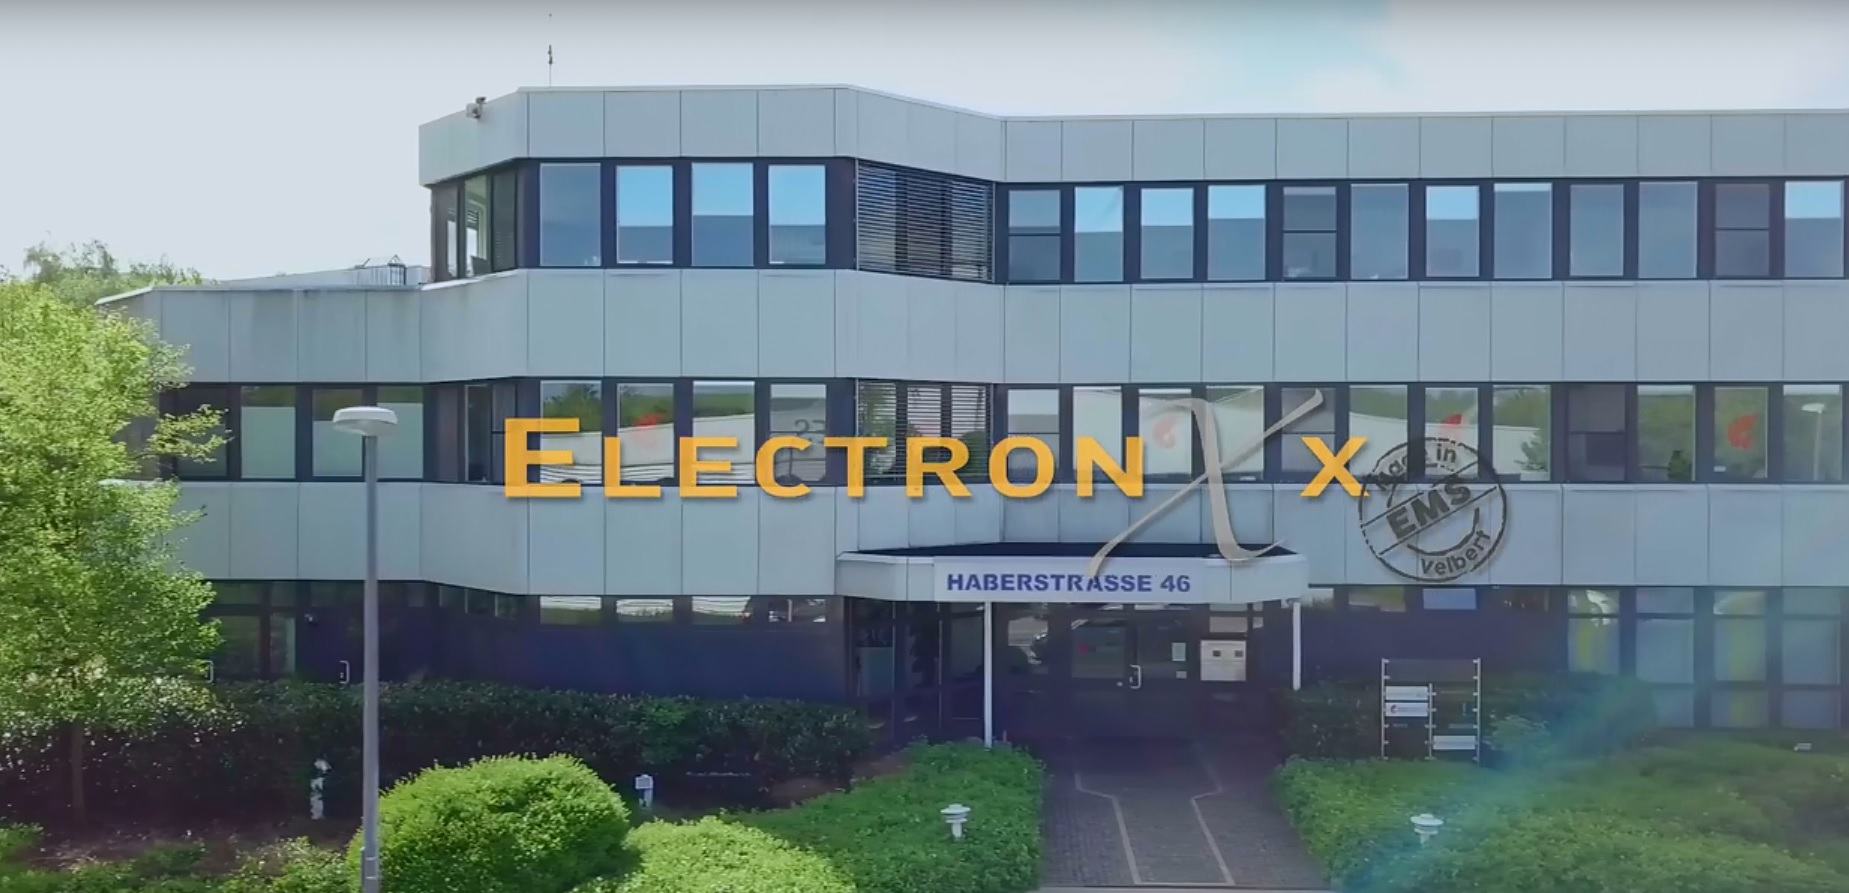 ElectronXx GmbH, Haberstrasse 46 in Velbert